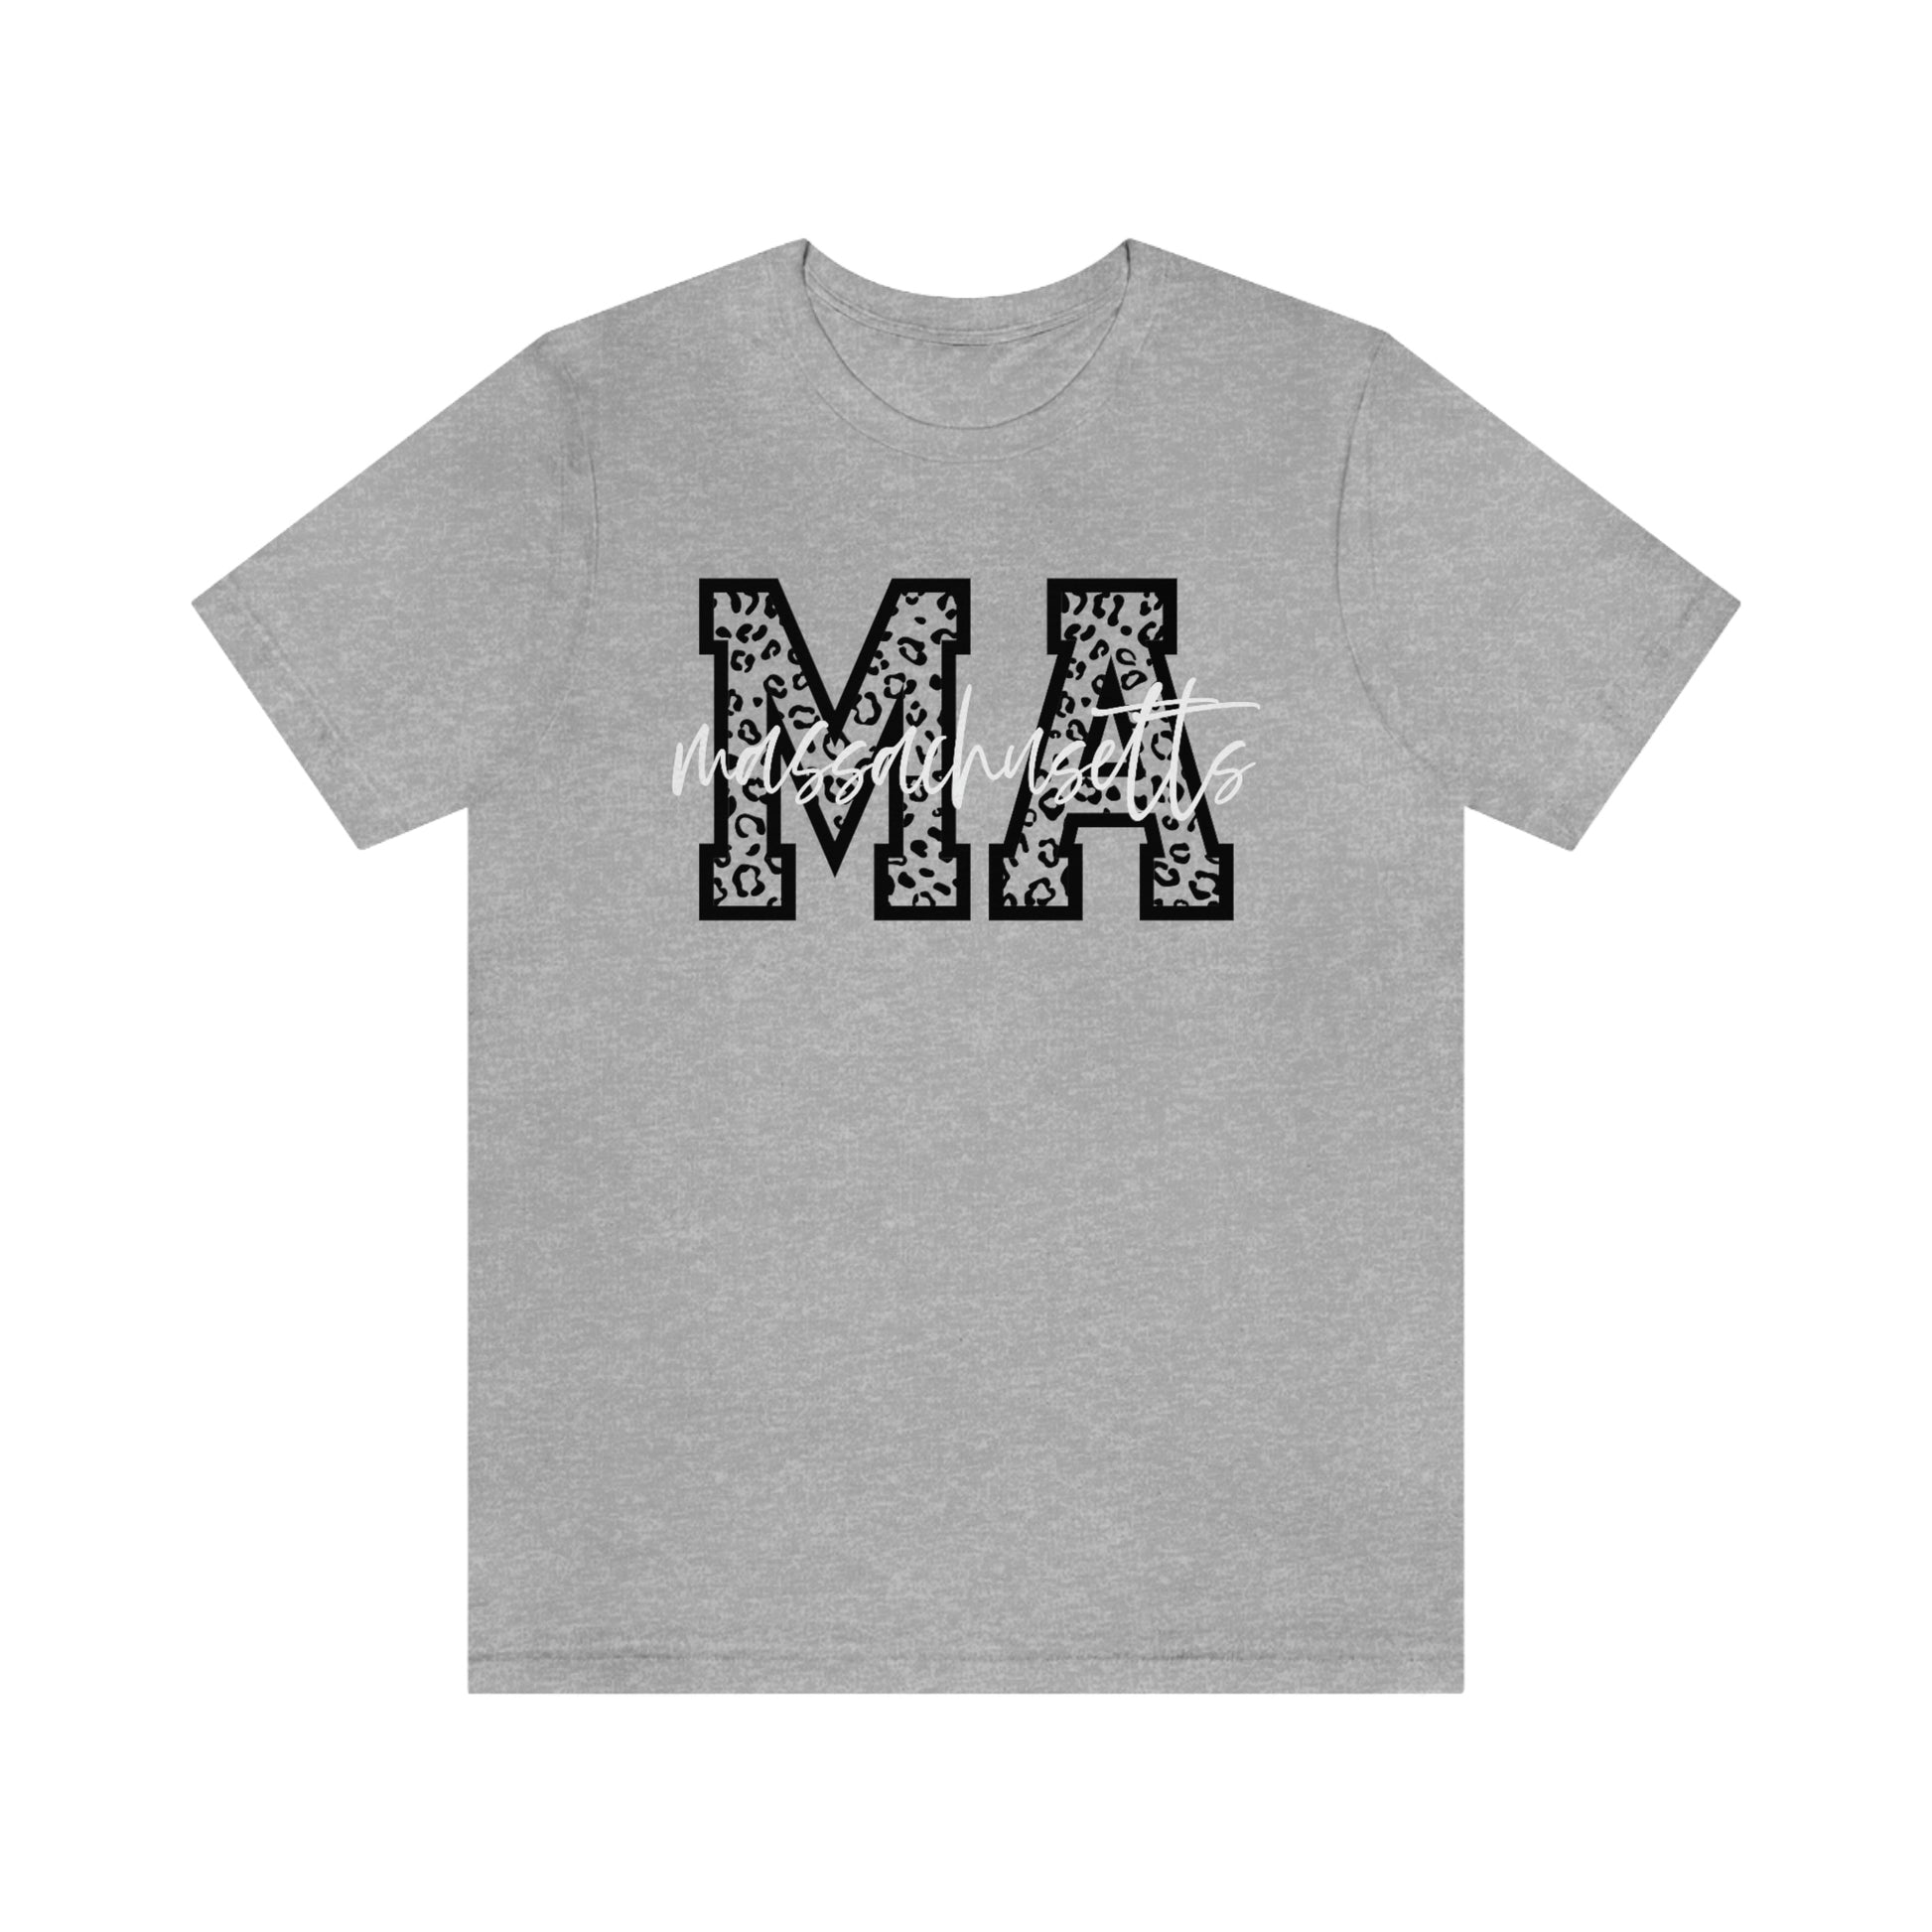 Massachusetts MA Leopard Print Letters White Script Short Sleeve T-shirt